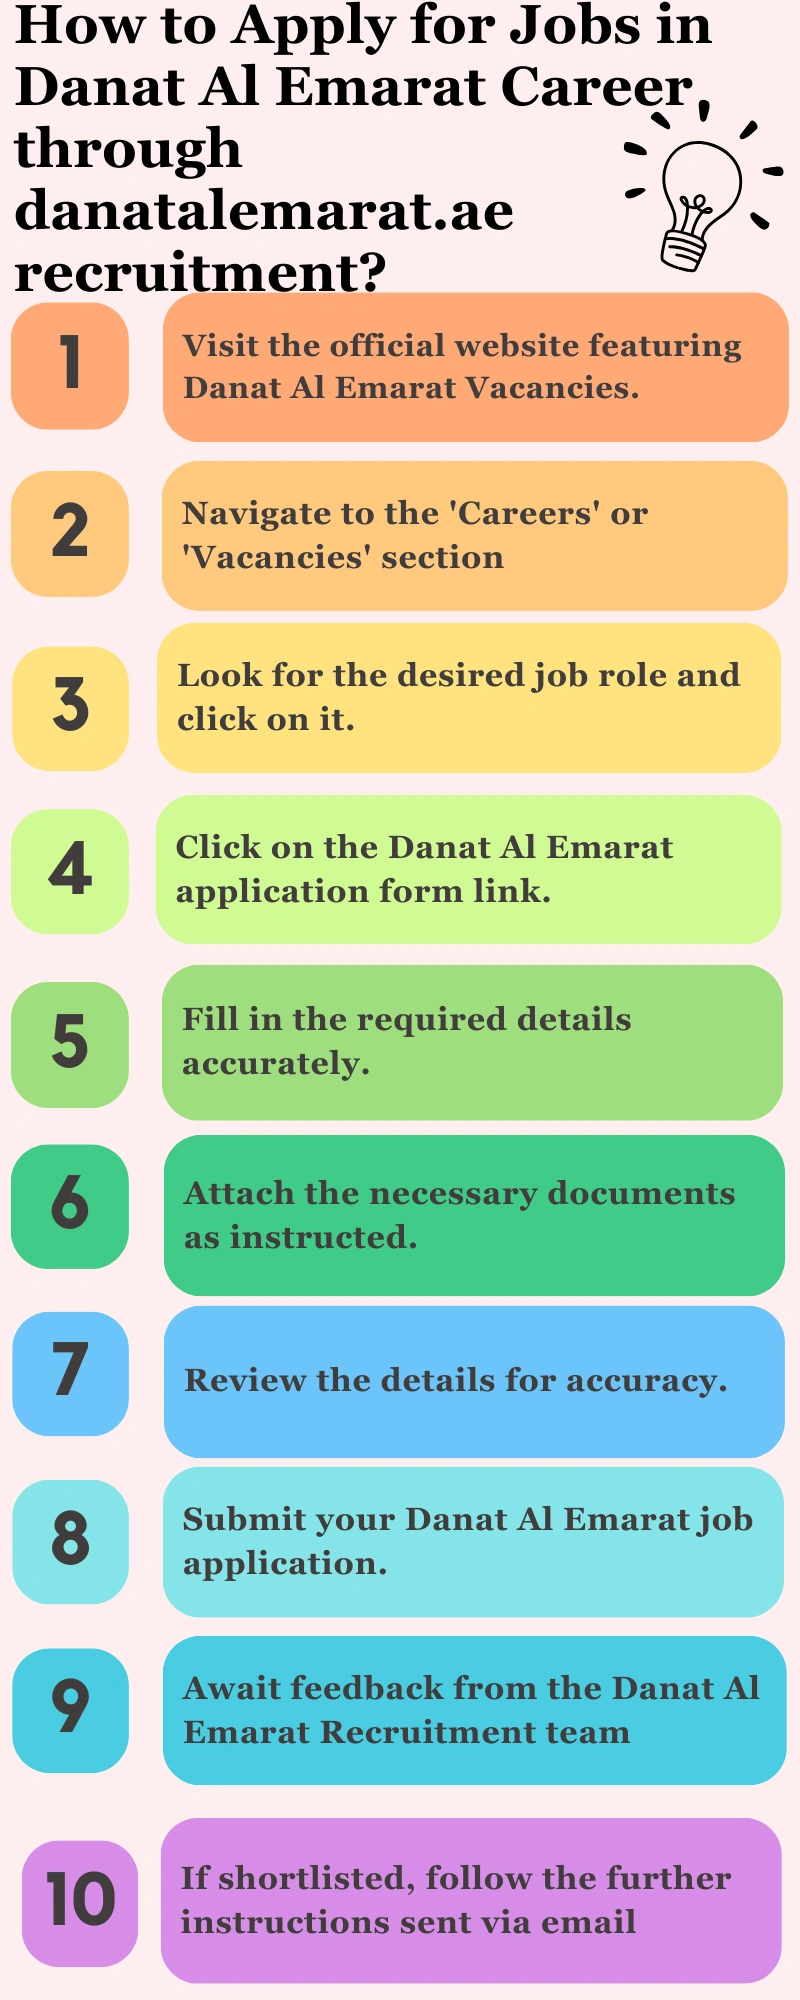 How to Apply for Jobs in Danat Al Emarat Career through danatalemarat.ae recruitment?